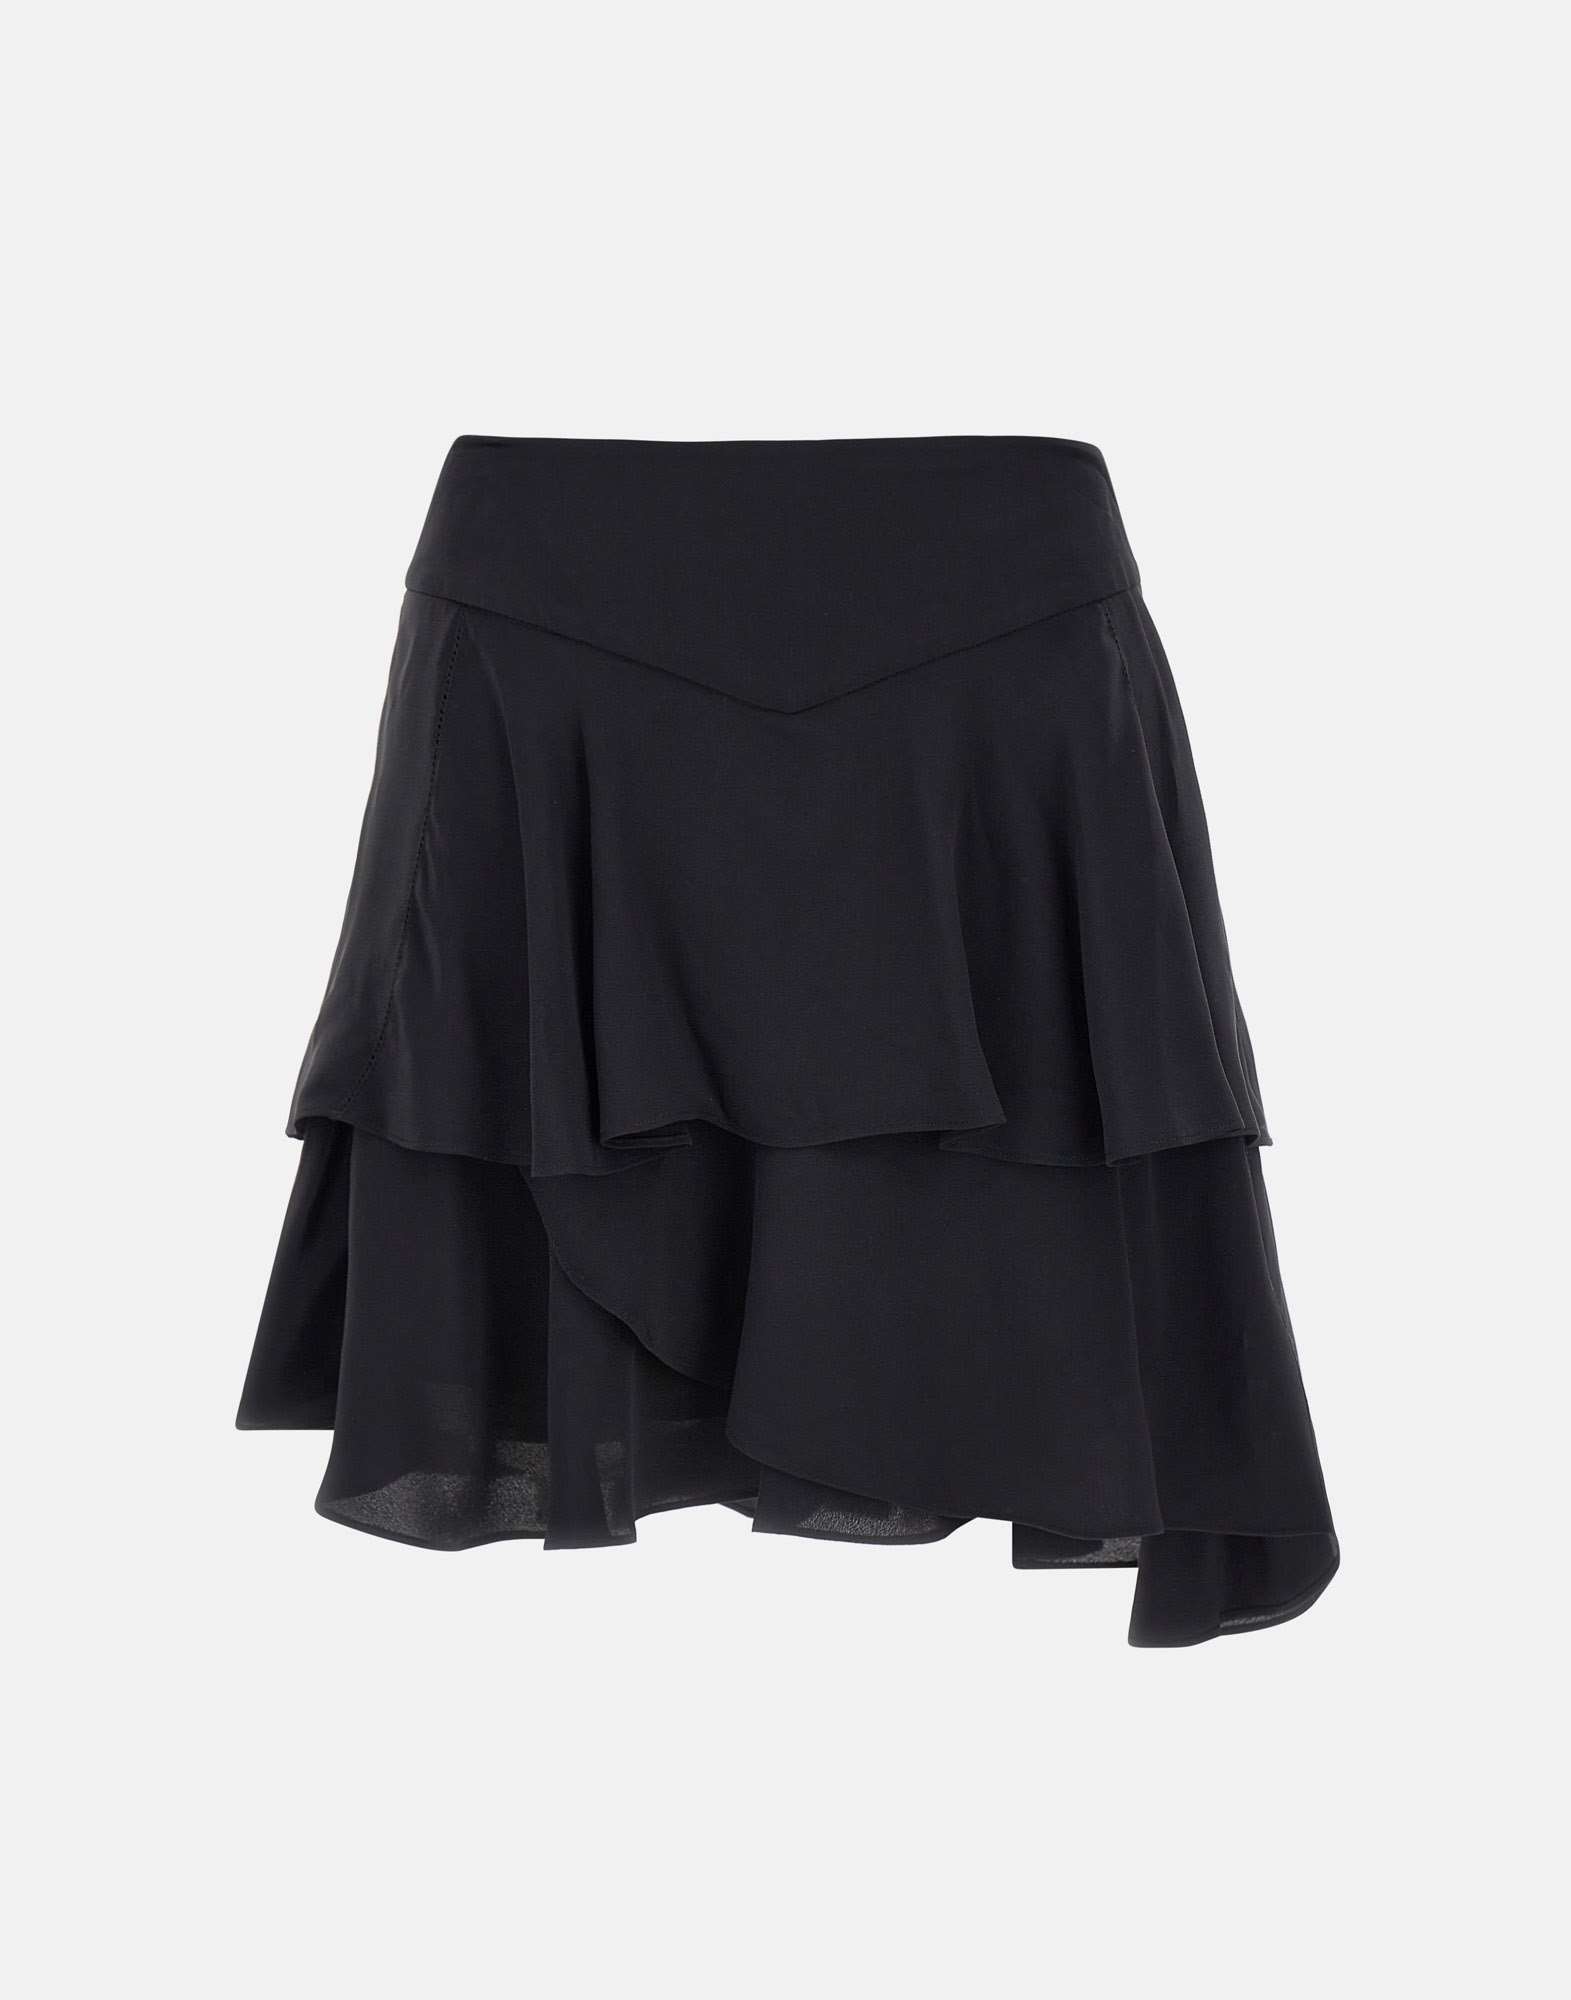 emerie Viscose And Silk Skirt